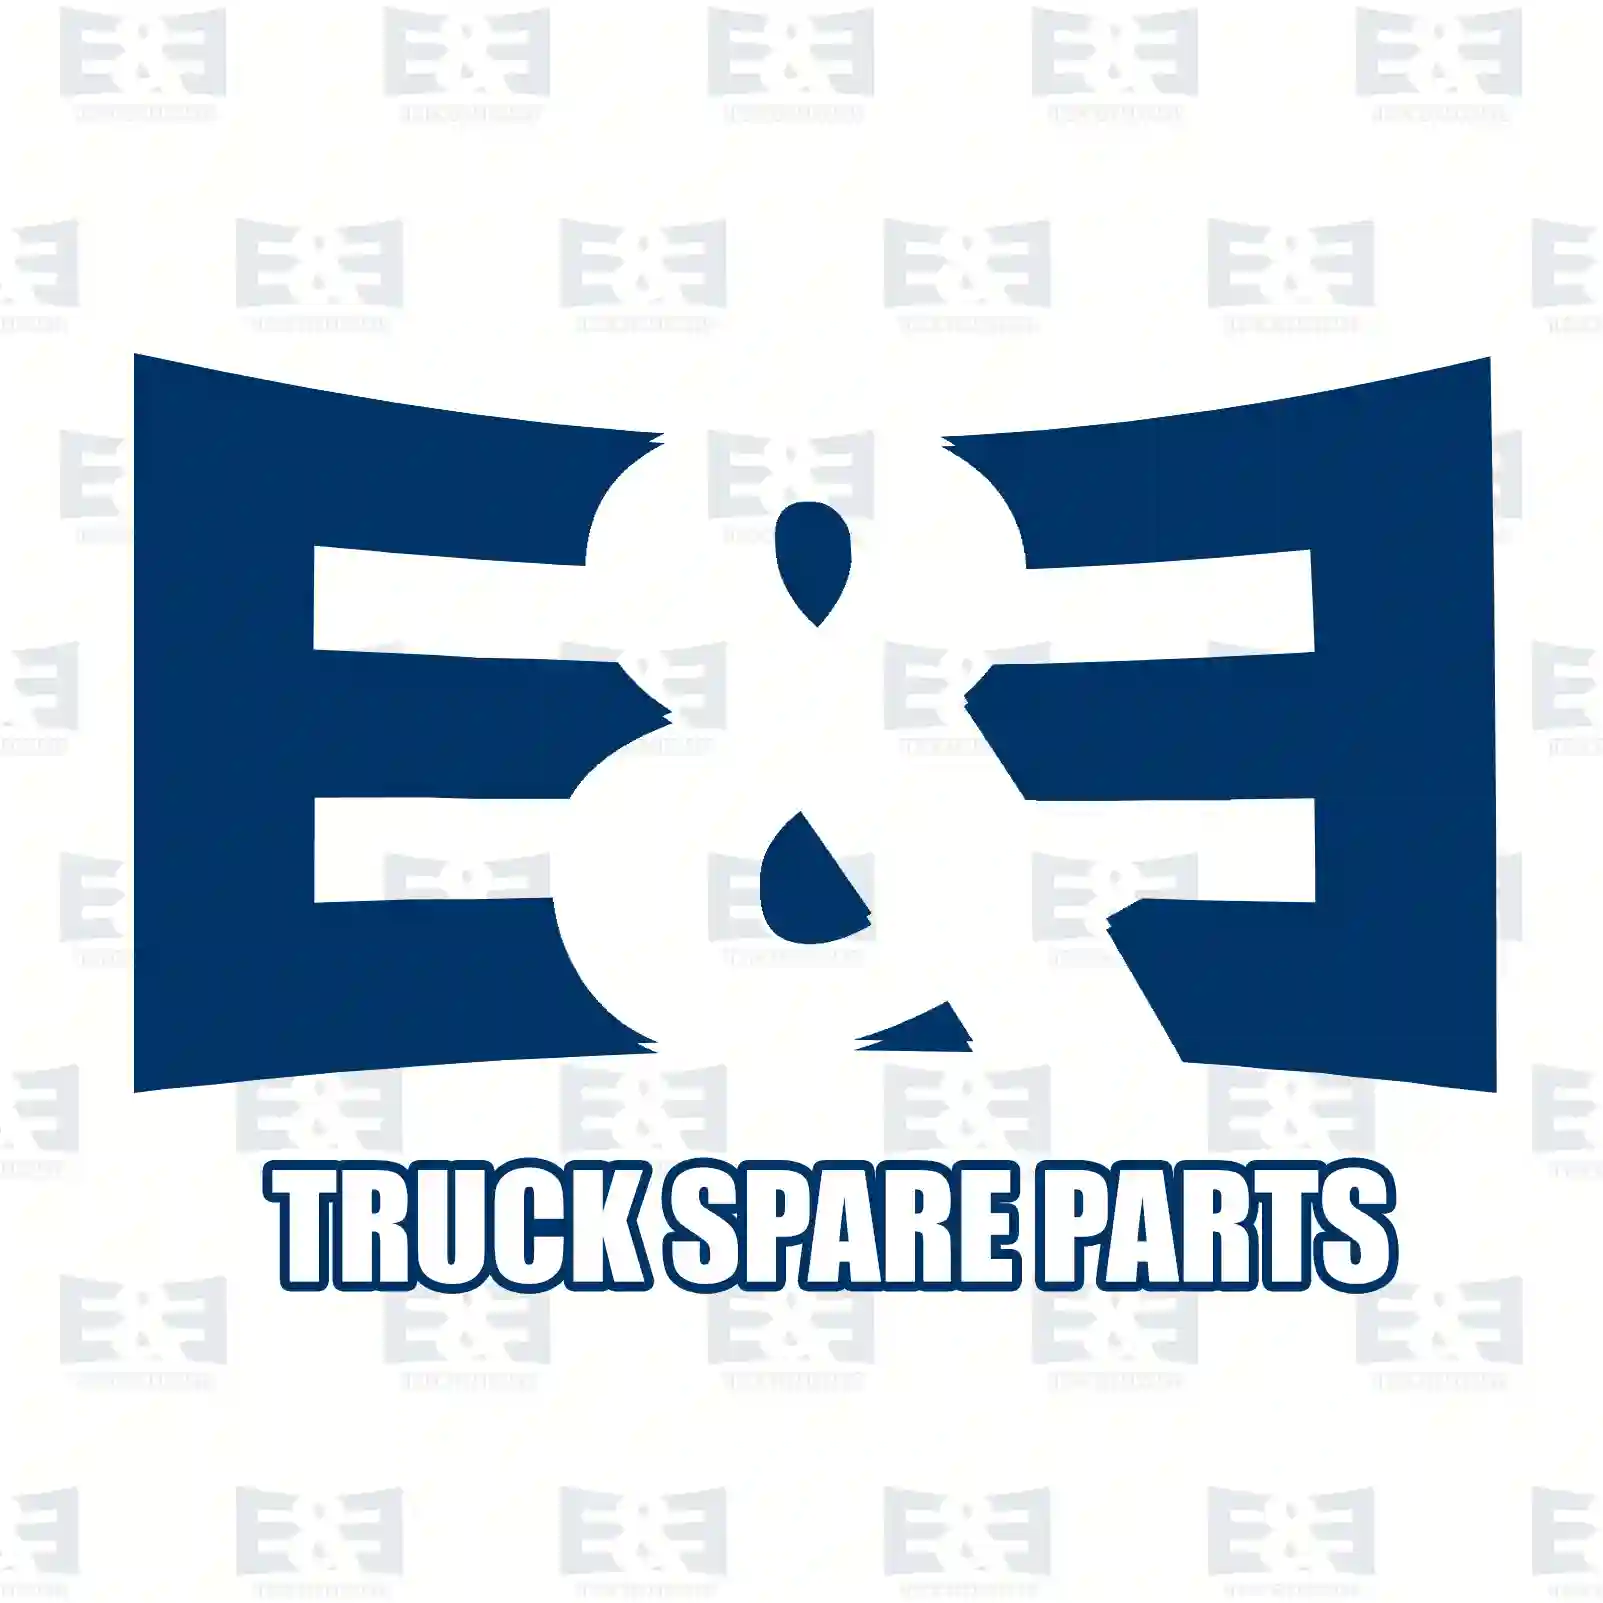 V-belt kit, 2E2202700, 06580412232, 06580422232, 06580432232, 06580472232, 06580490007, 06580722322, 06580732322, 51968206033, 0059971992 ||  2E2202700 E&E Truck Spare Parts | Truck Spare Parts, Auotomotive Spare Parts V-belt kit, 2E2202700, 06580412232, 06580422232, 06580432232, 06580472232, 06580490007, 06580722322, 06580732322, 51968206033, 0059971992 ||  2E2202700 E&E Truck Spare Parts | Truck Spare Parts, Auotomotive Spare Parts